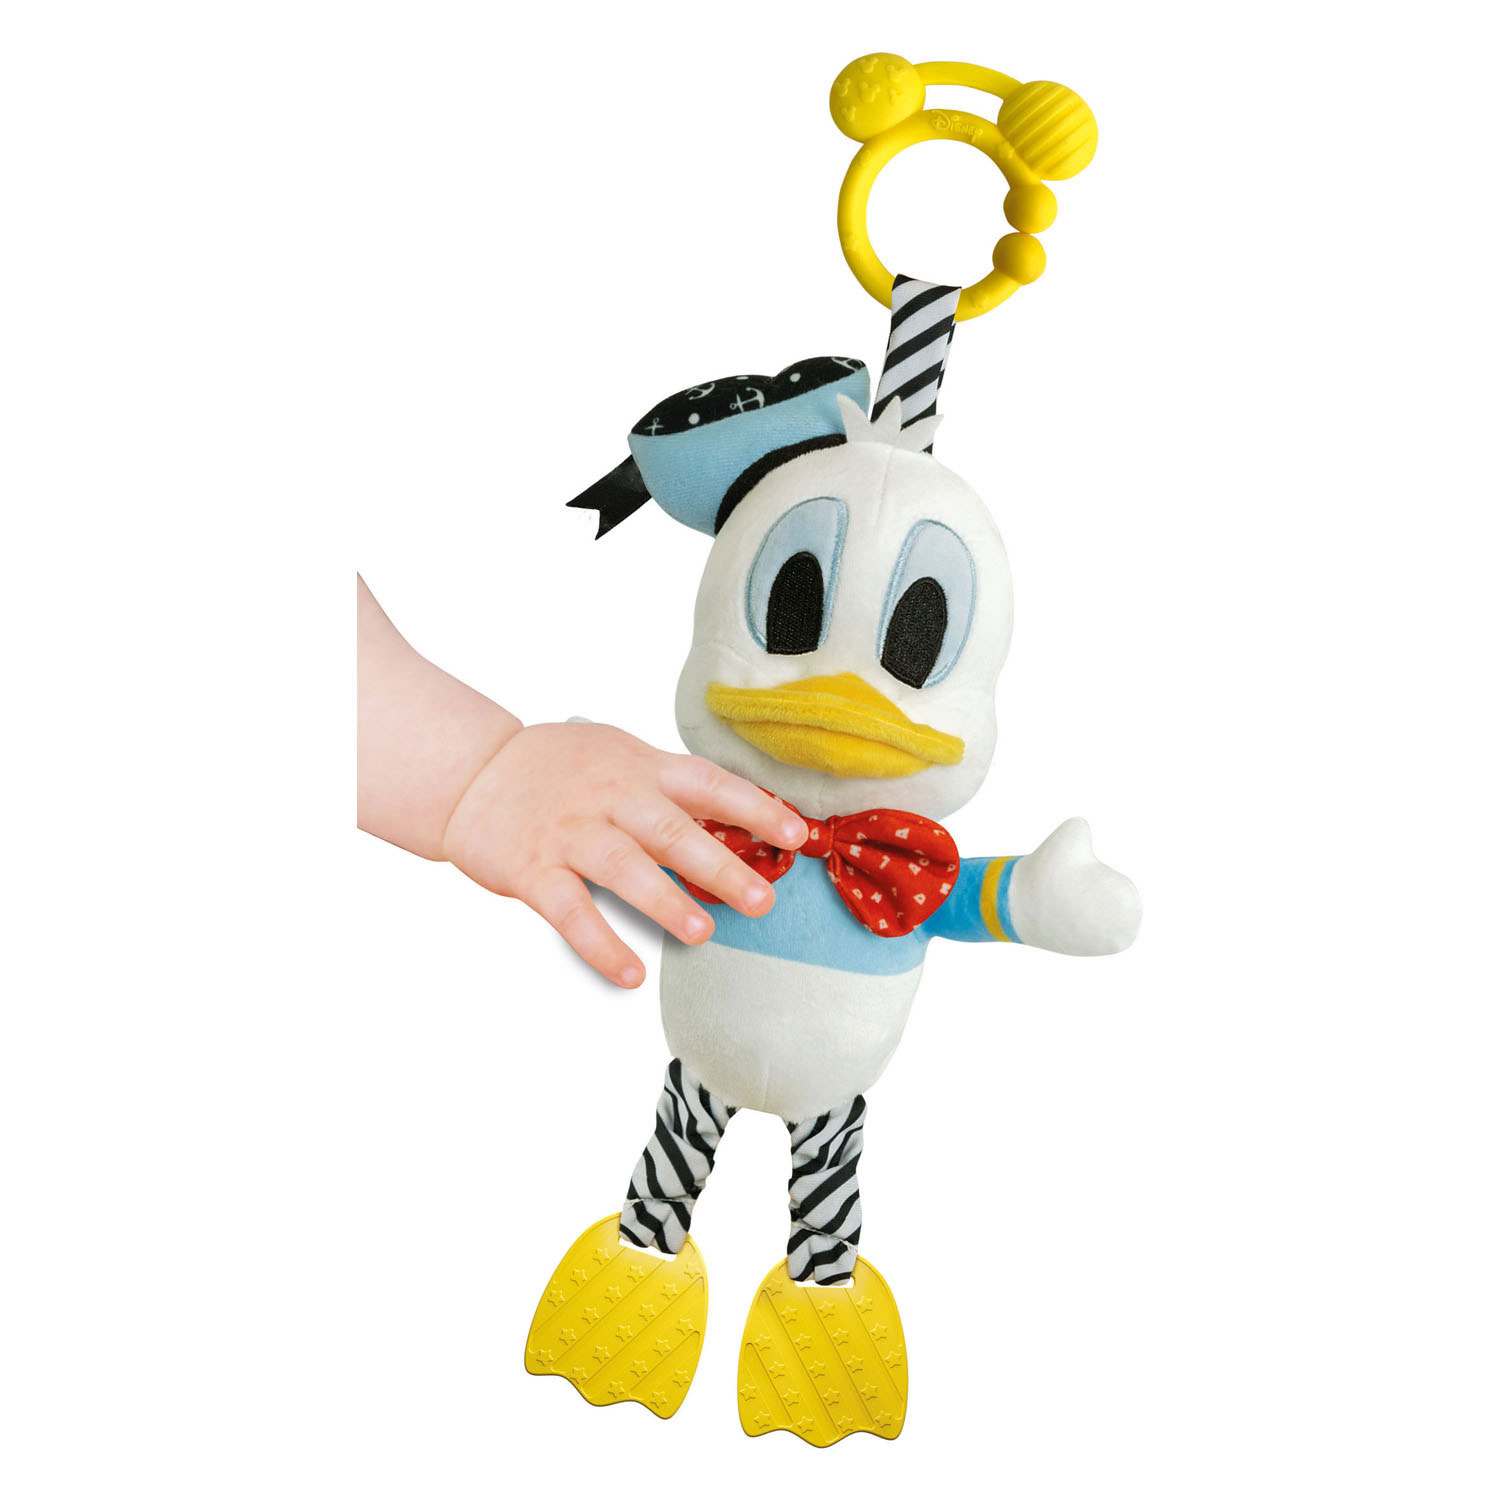 Clementoni Donald Duck Aktivitäten Plüschtier